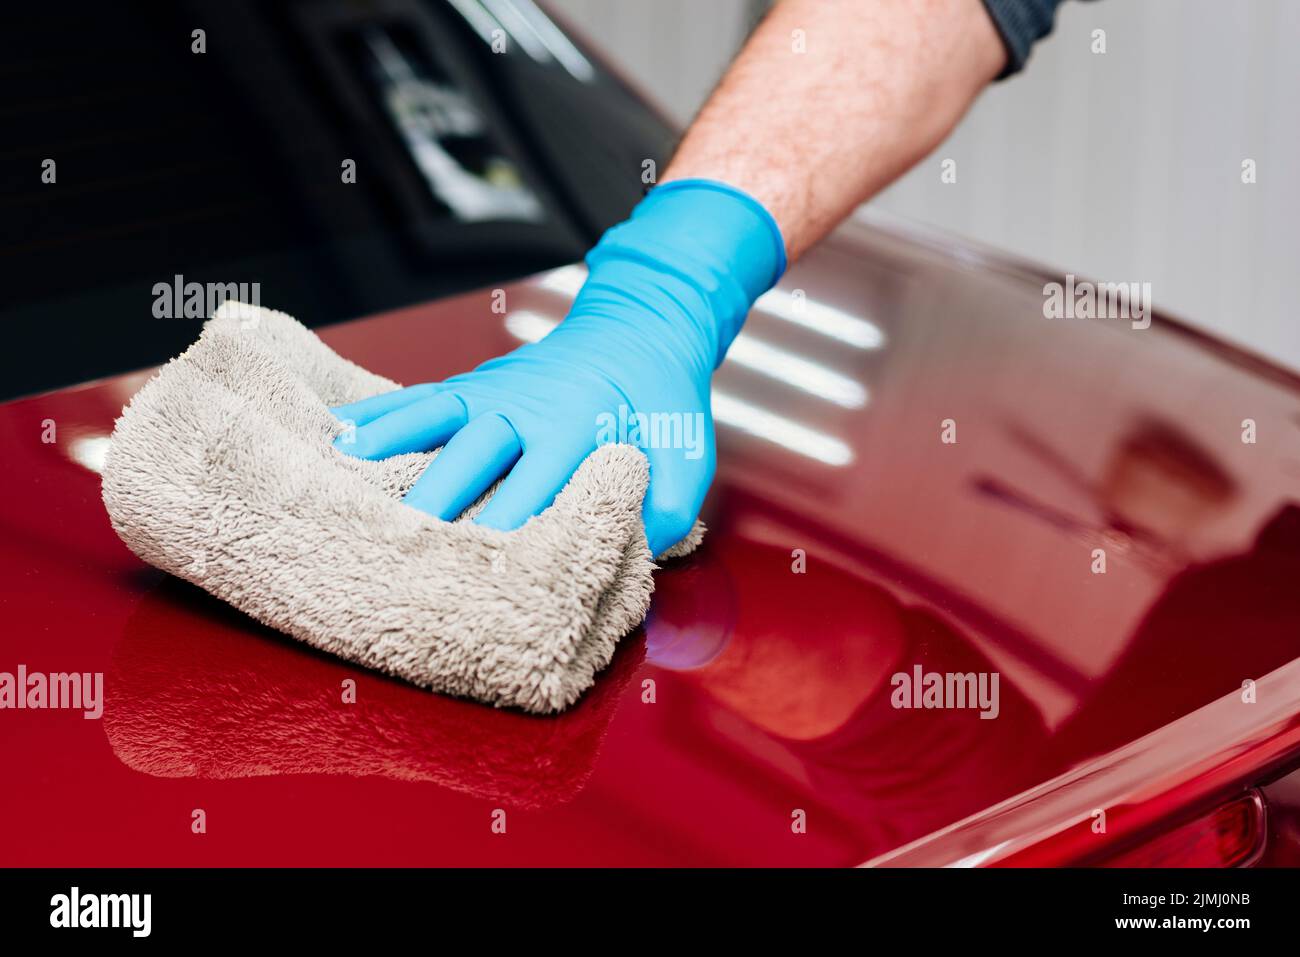 Car Wash Supplies Archives - Ben-Ami Auto Care, Automotive Auto Care  Supplies, Auto Detail Supplies